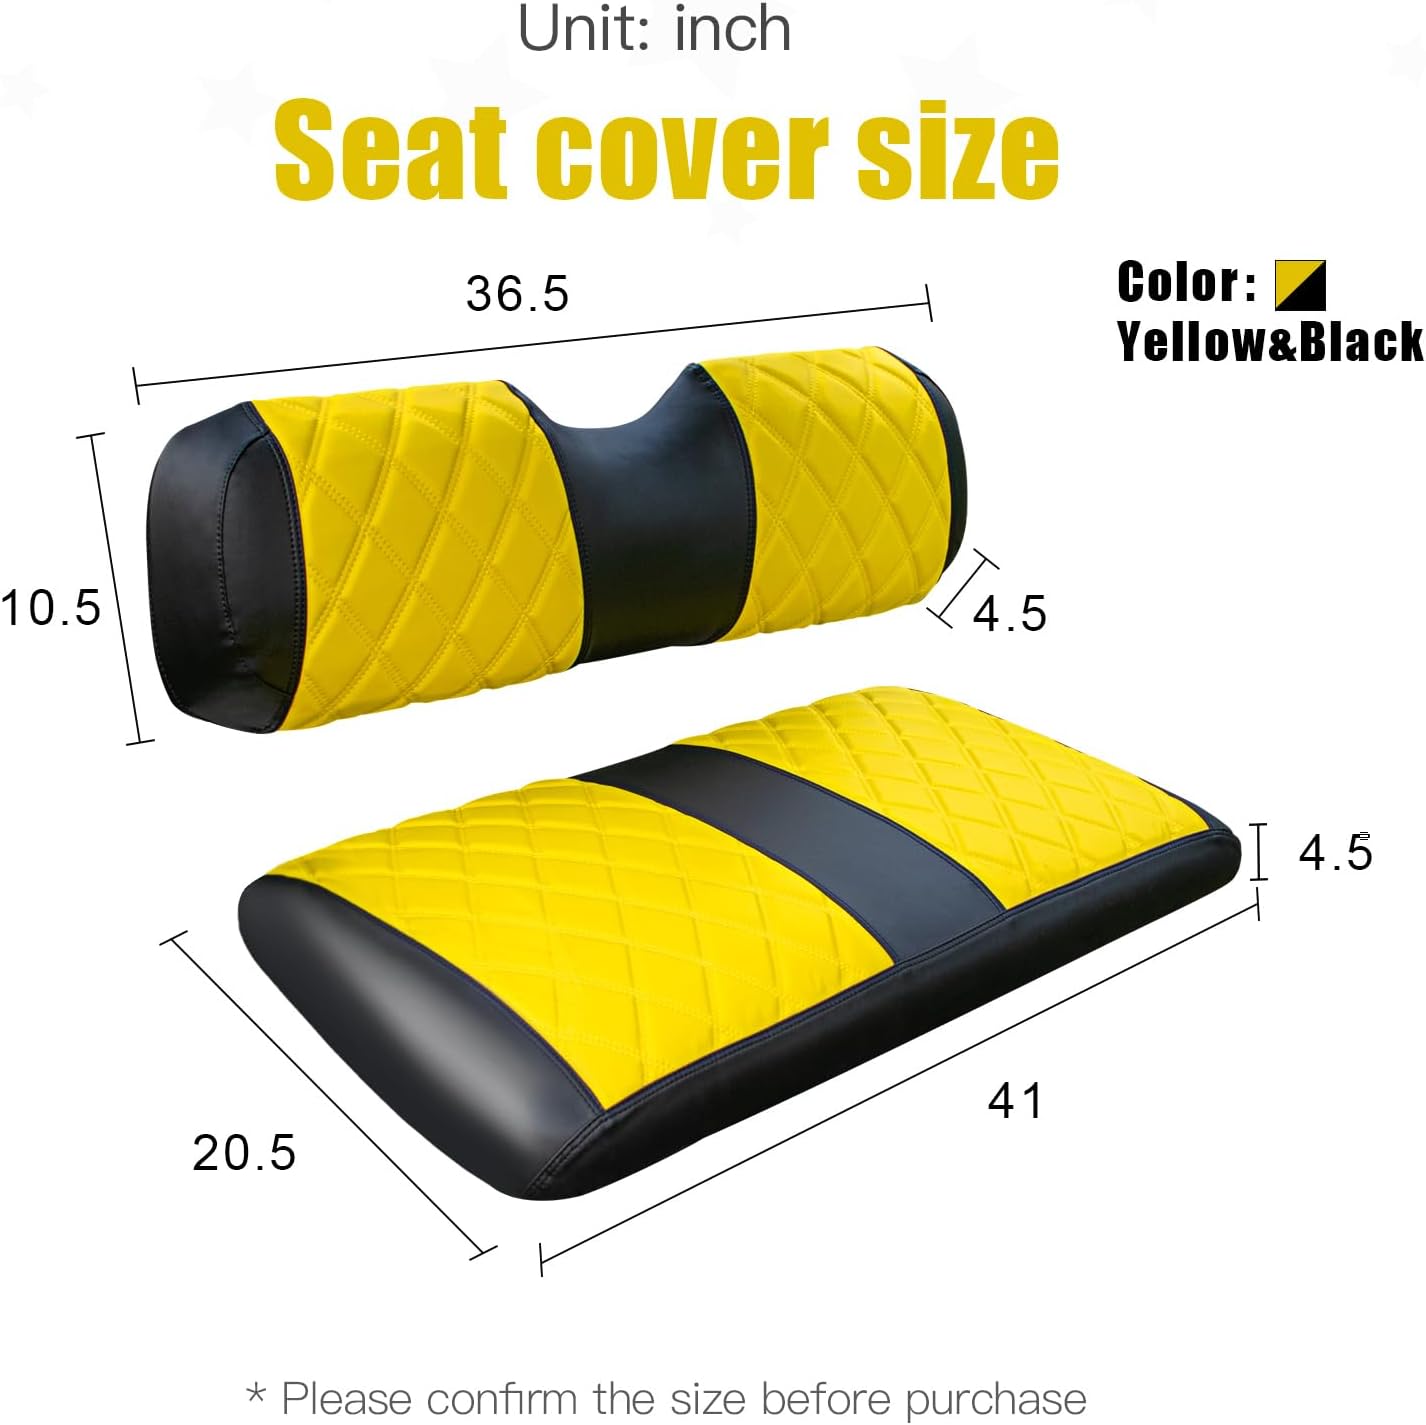 Nokins Seat Cover (Black & Yellow) EZGO TXT